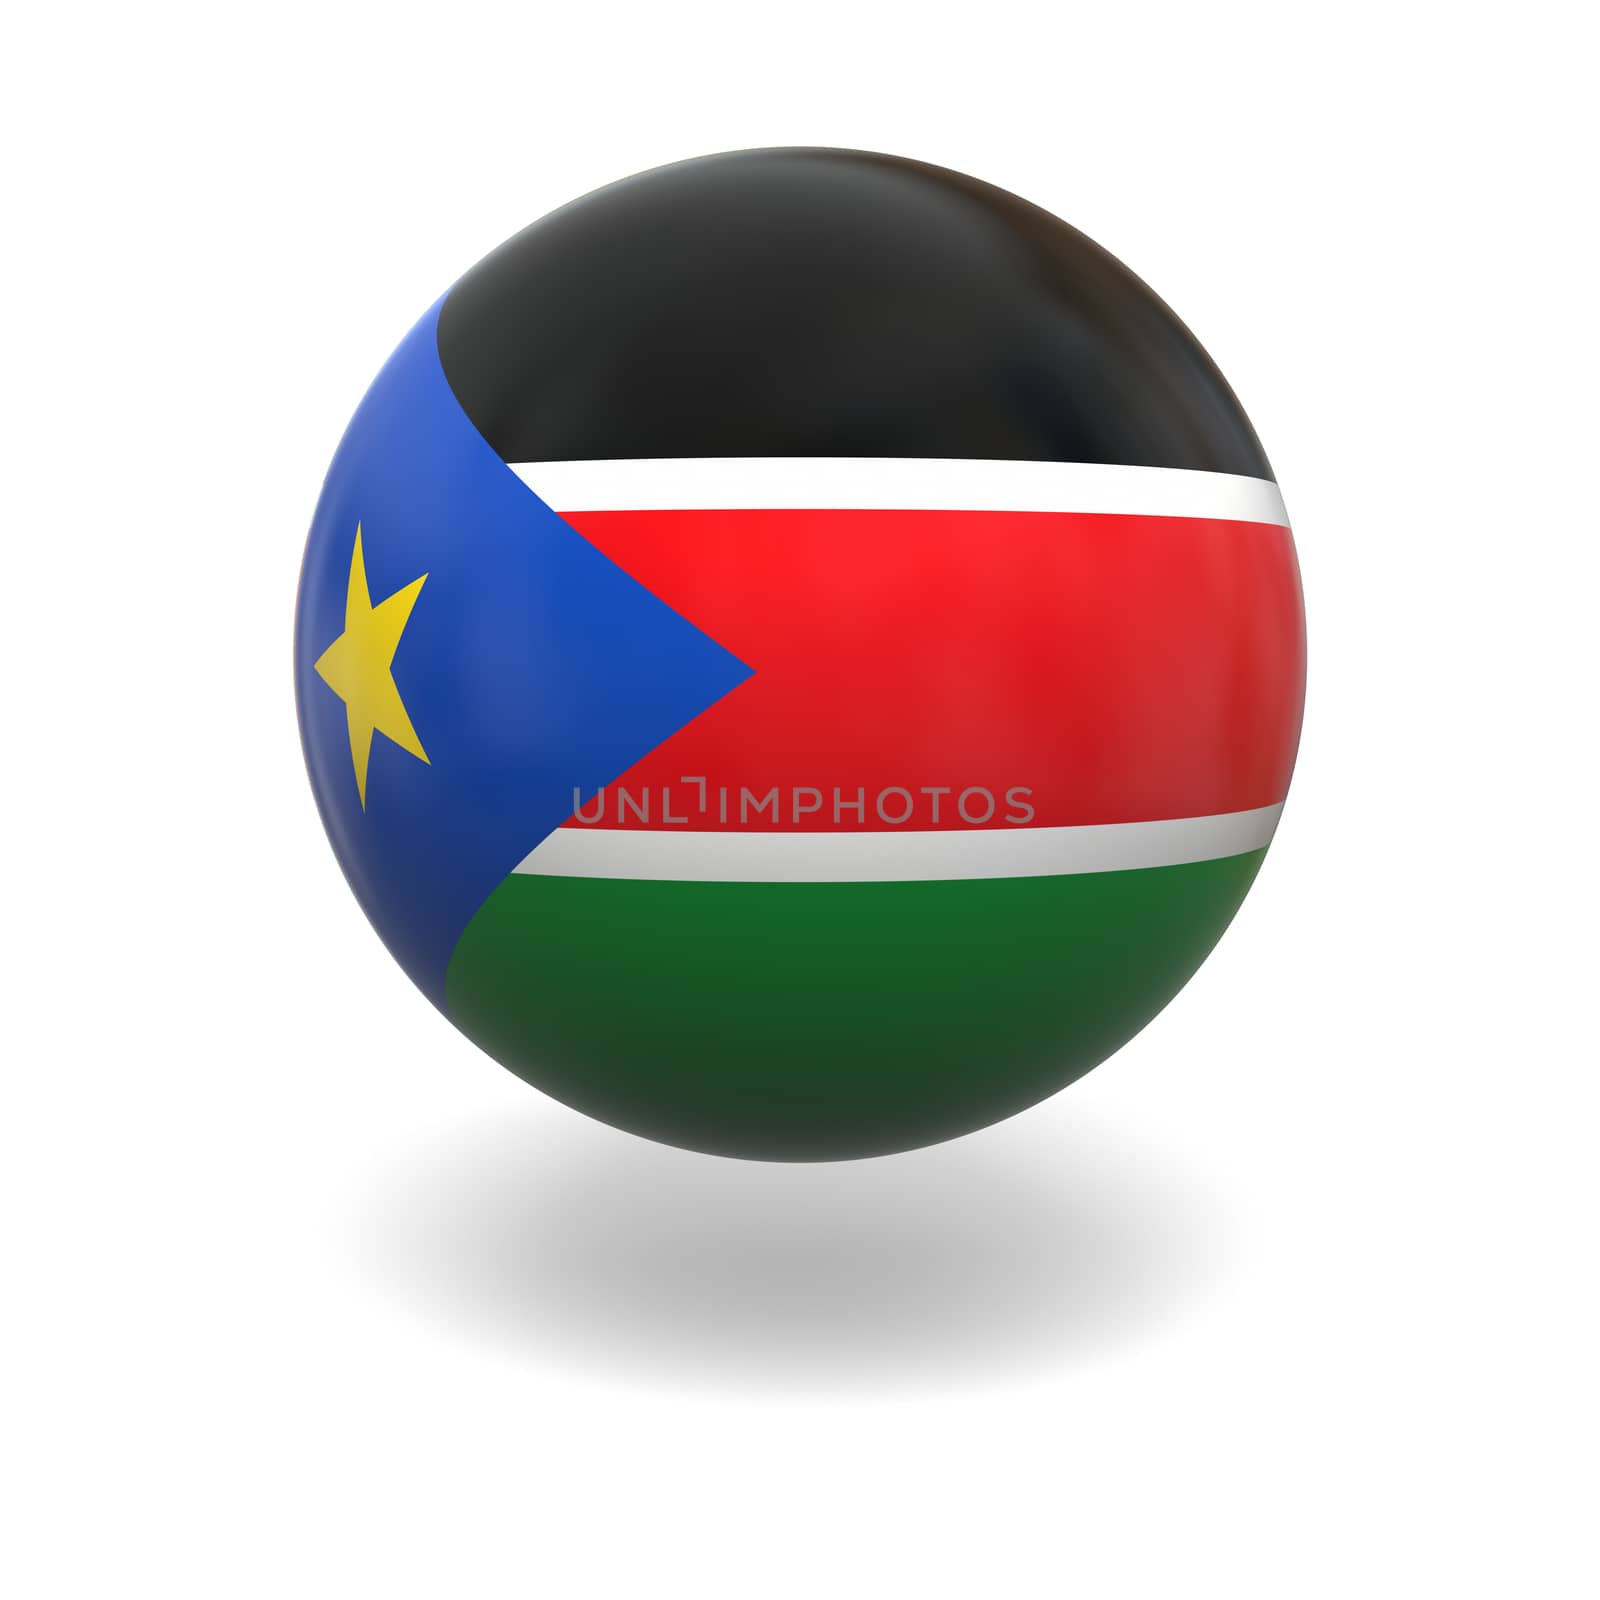 South Sudan flag by Harvepino